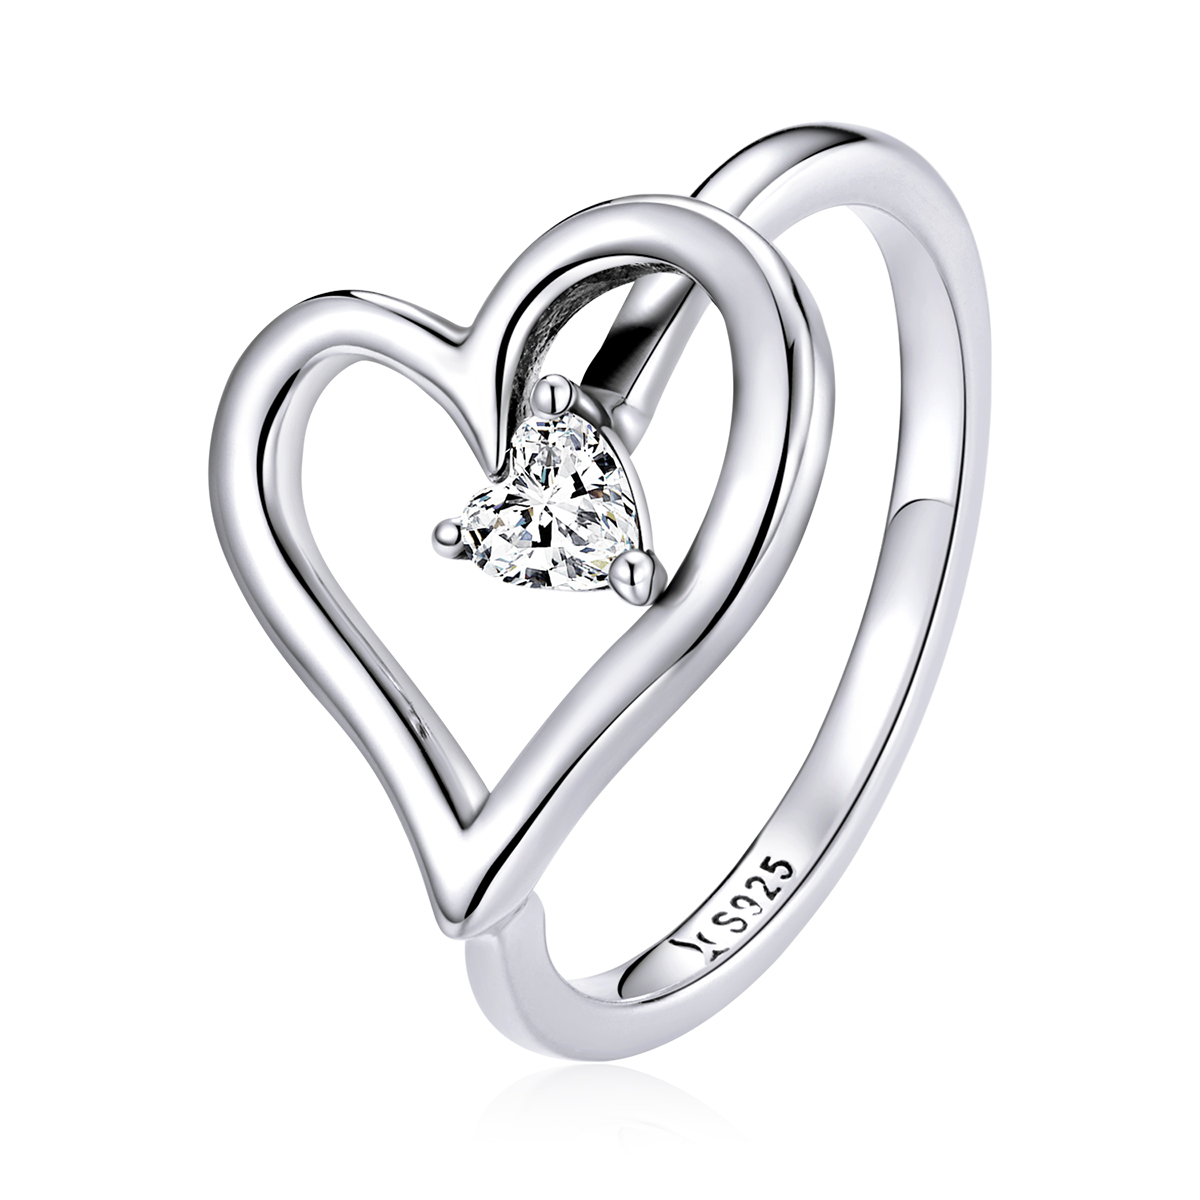 E-shop Linda's Jewelry Strieborný prsteň Srdce z lásky 925/1000 IPR084-56